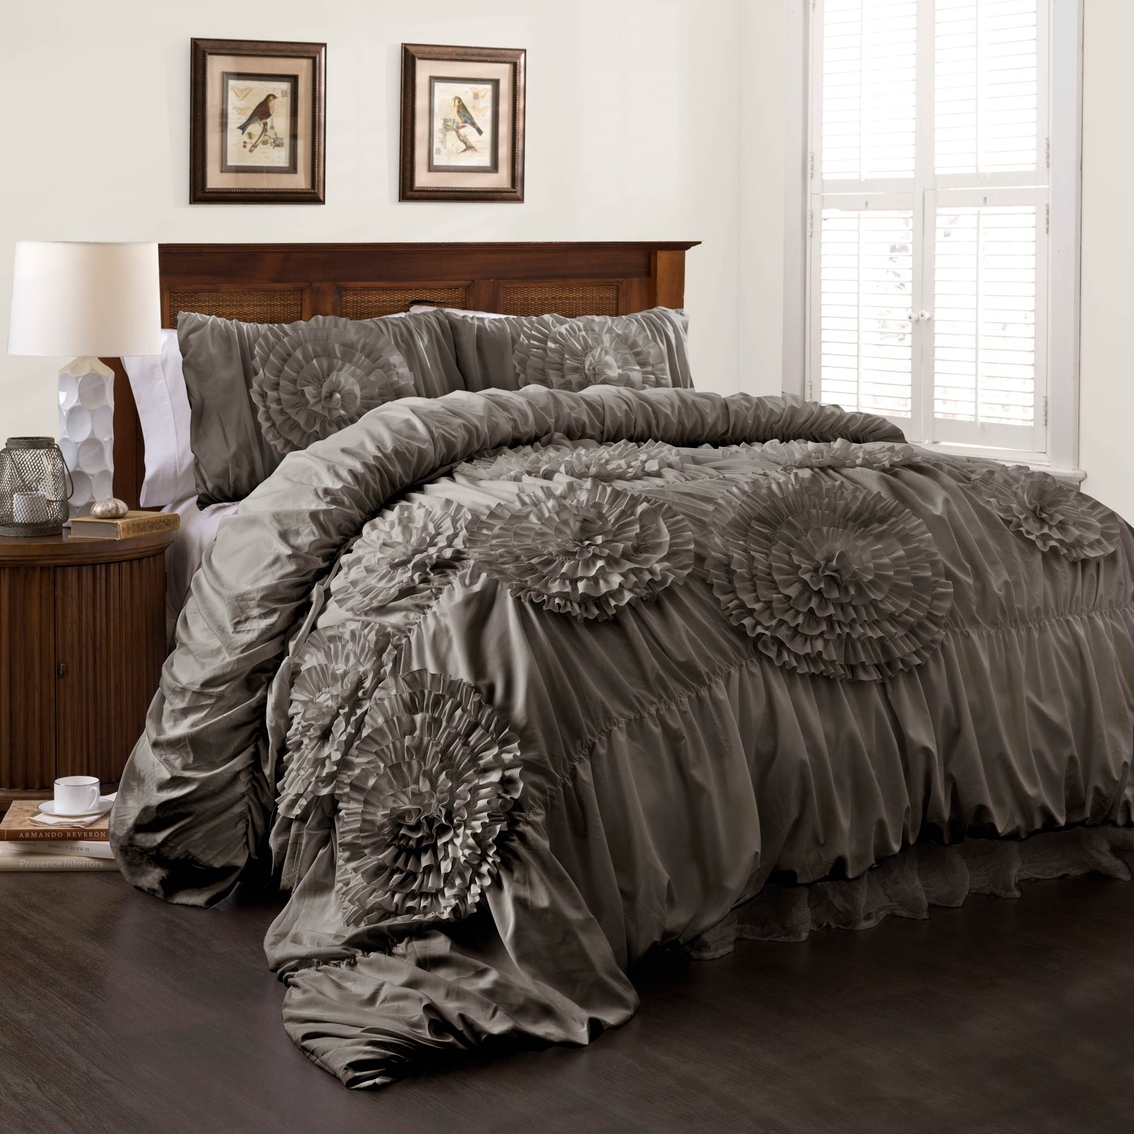 Lush Decor Serena 3 Pc. Comforter Set | Bedding Sets | Back To School ...